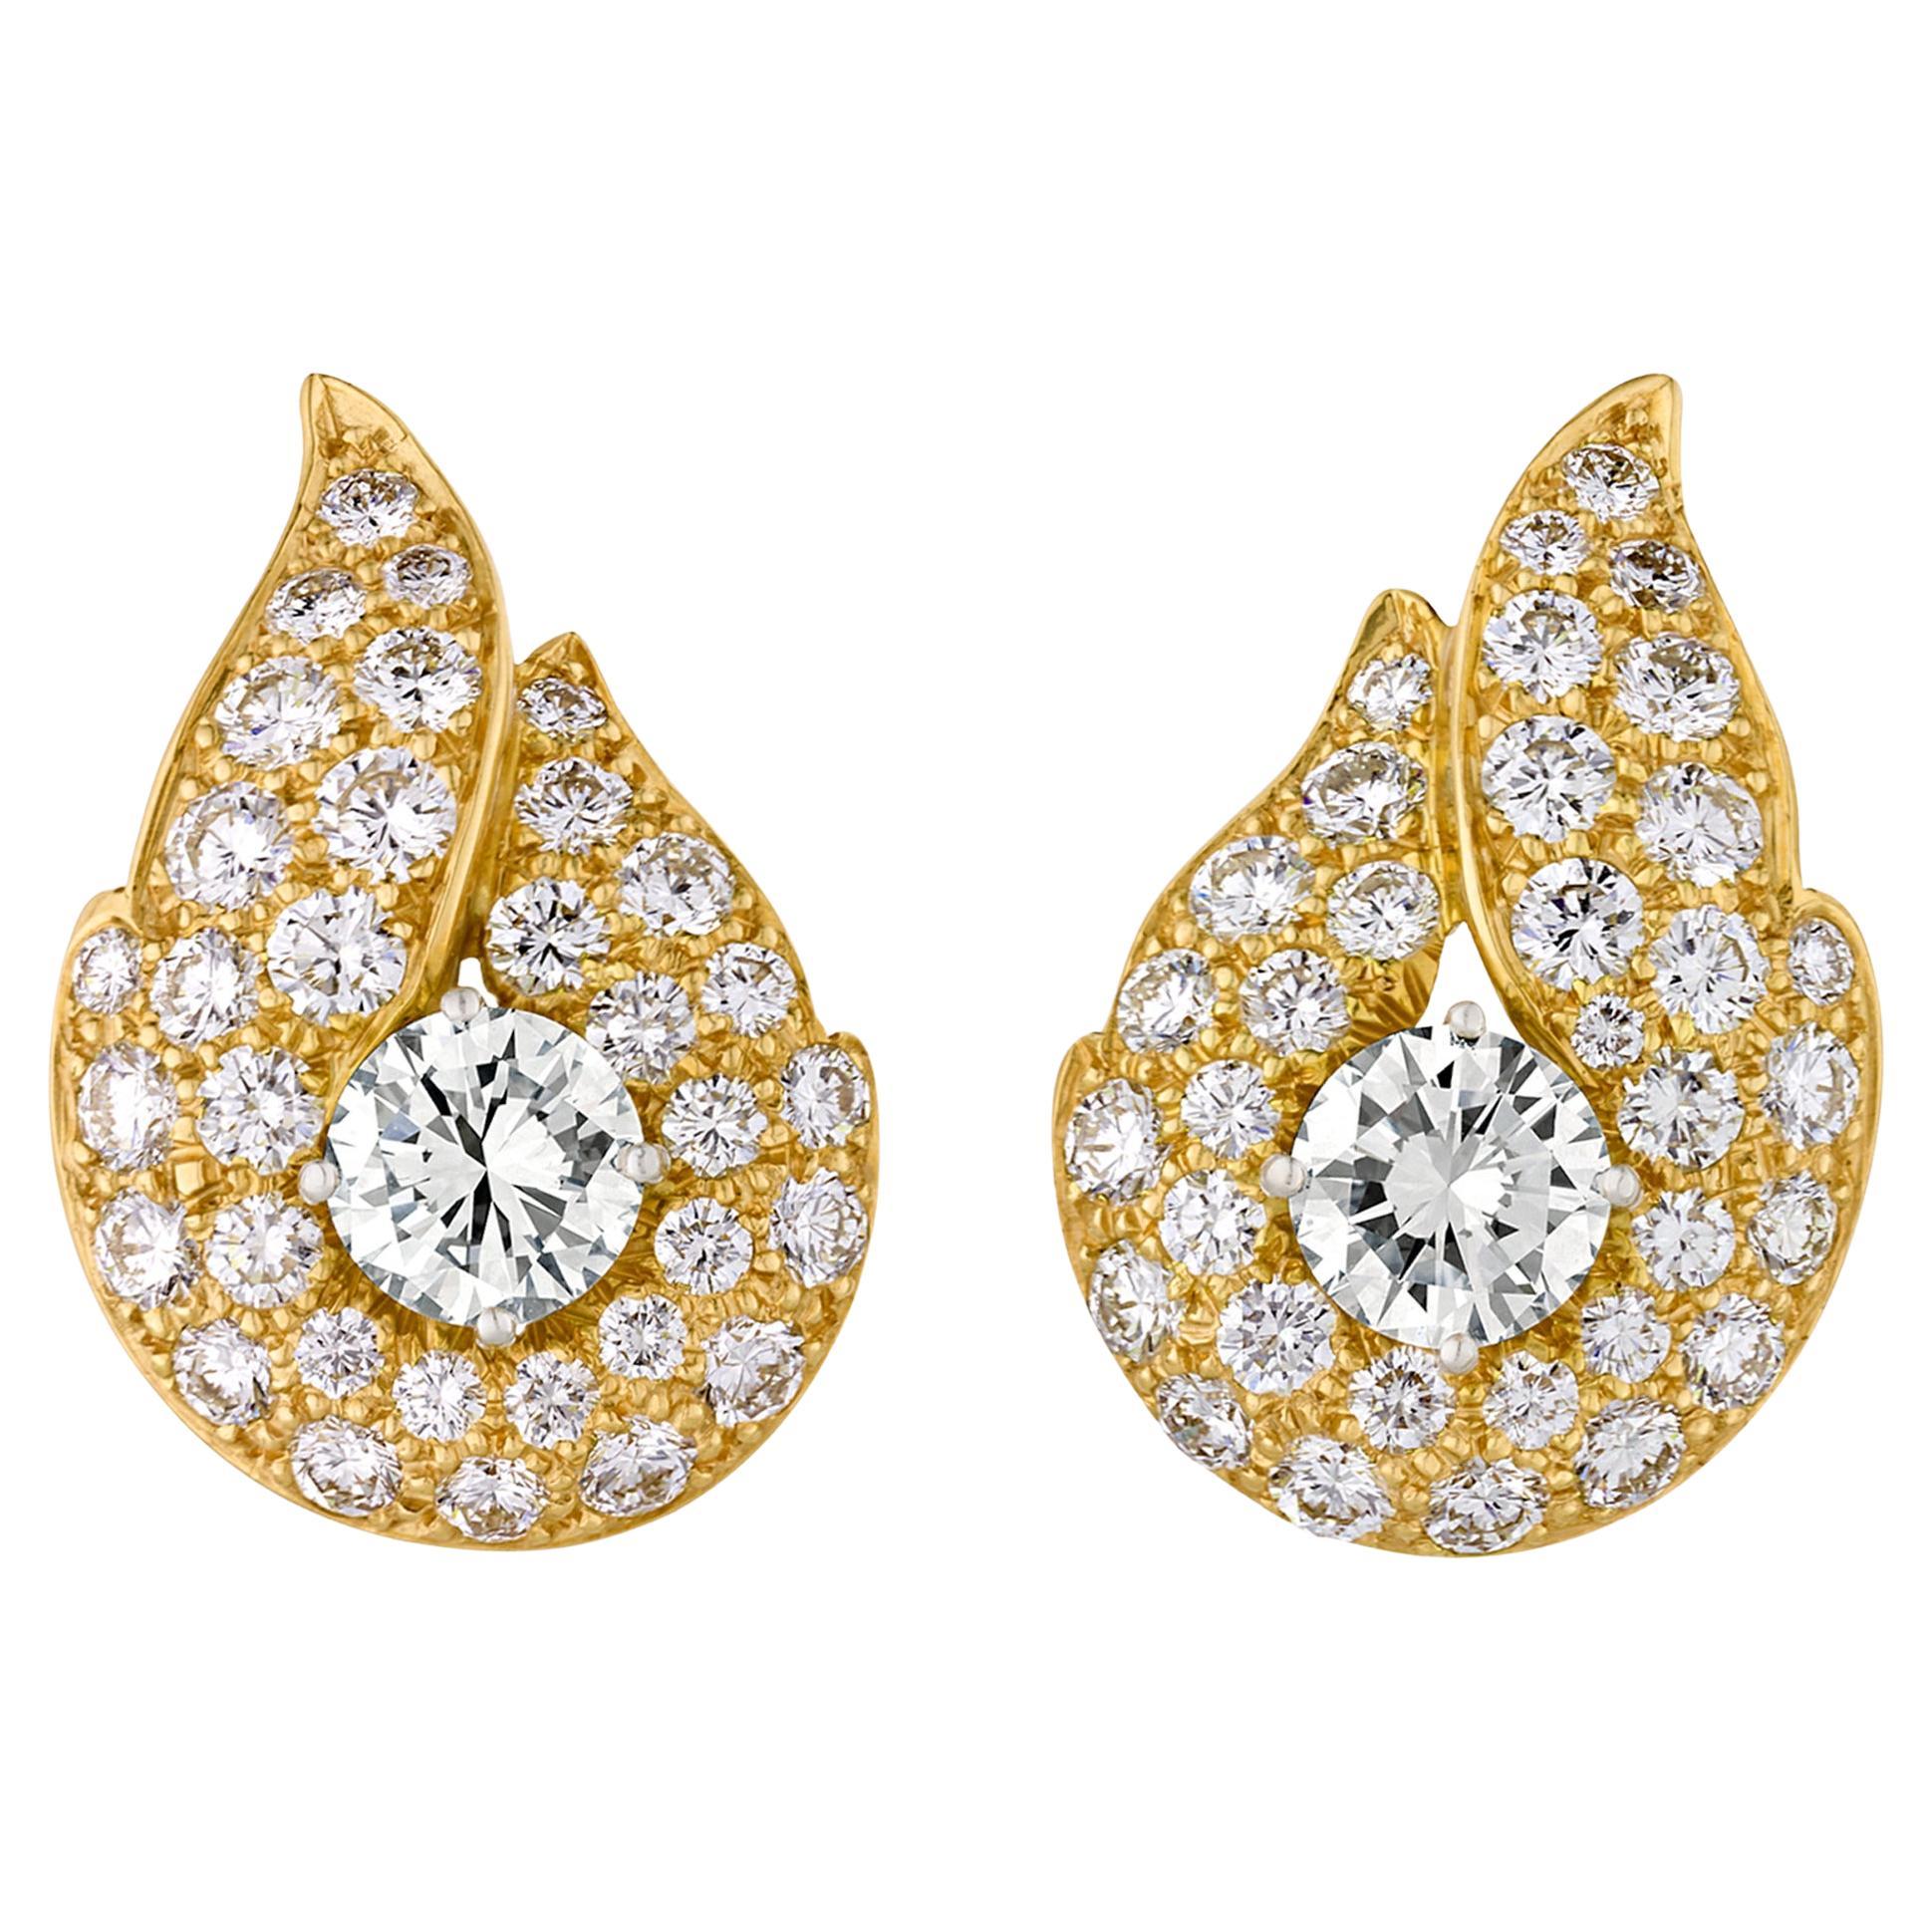 White Diamond Earrings, 2.20 Carats